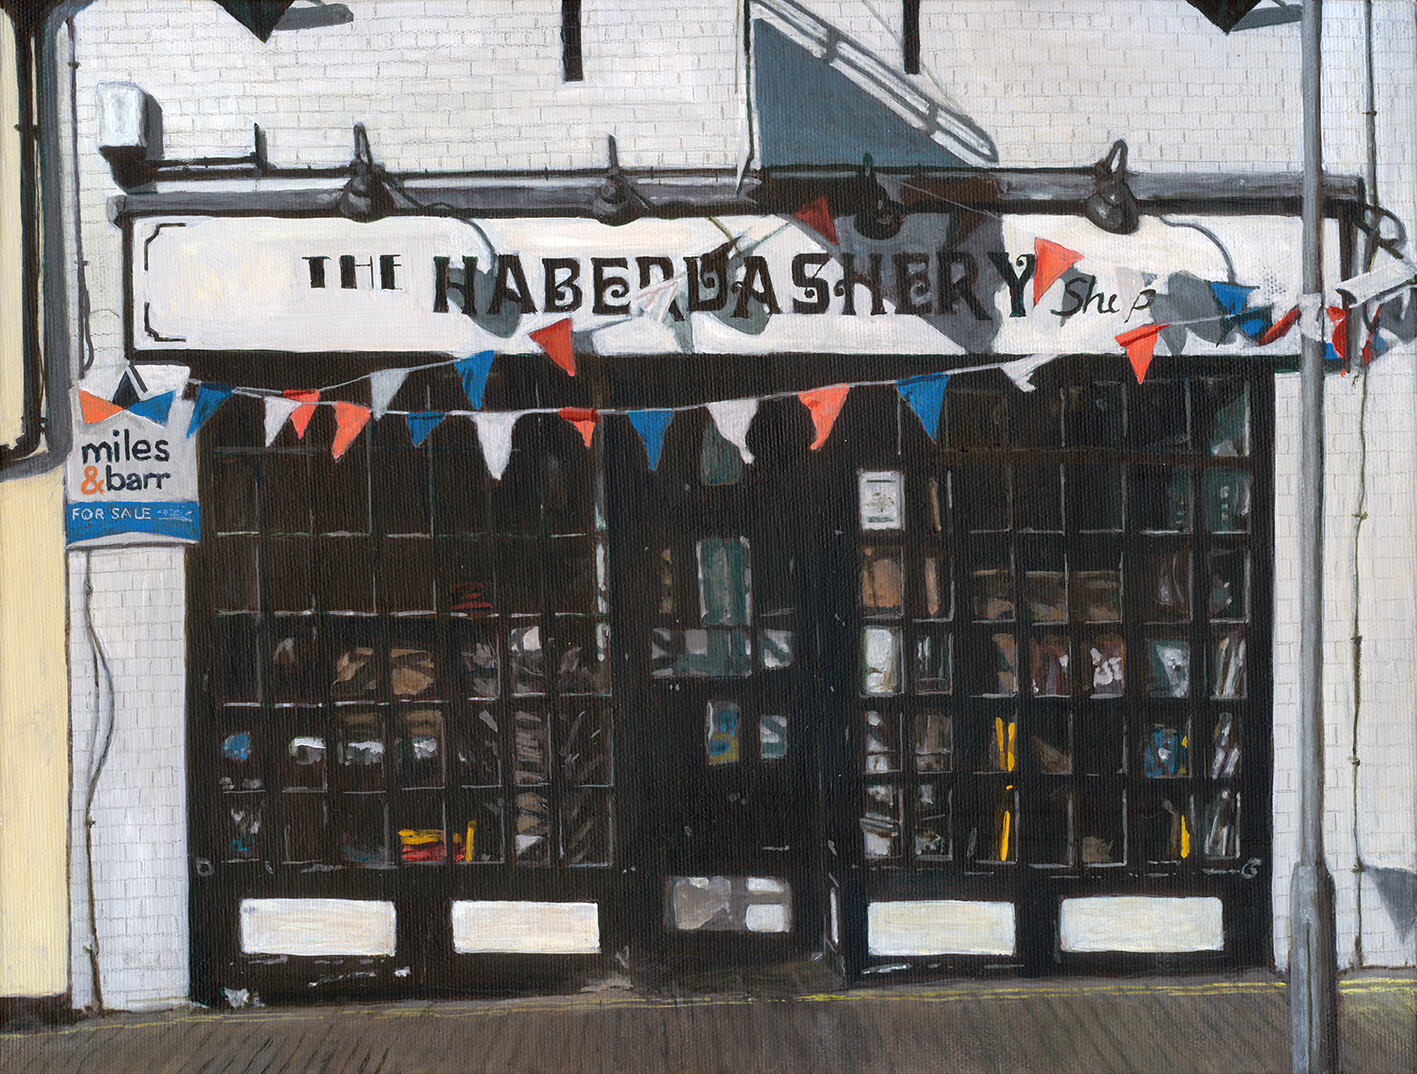 The Haberdashery Shop, Ramsgate